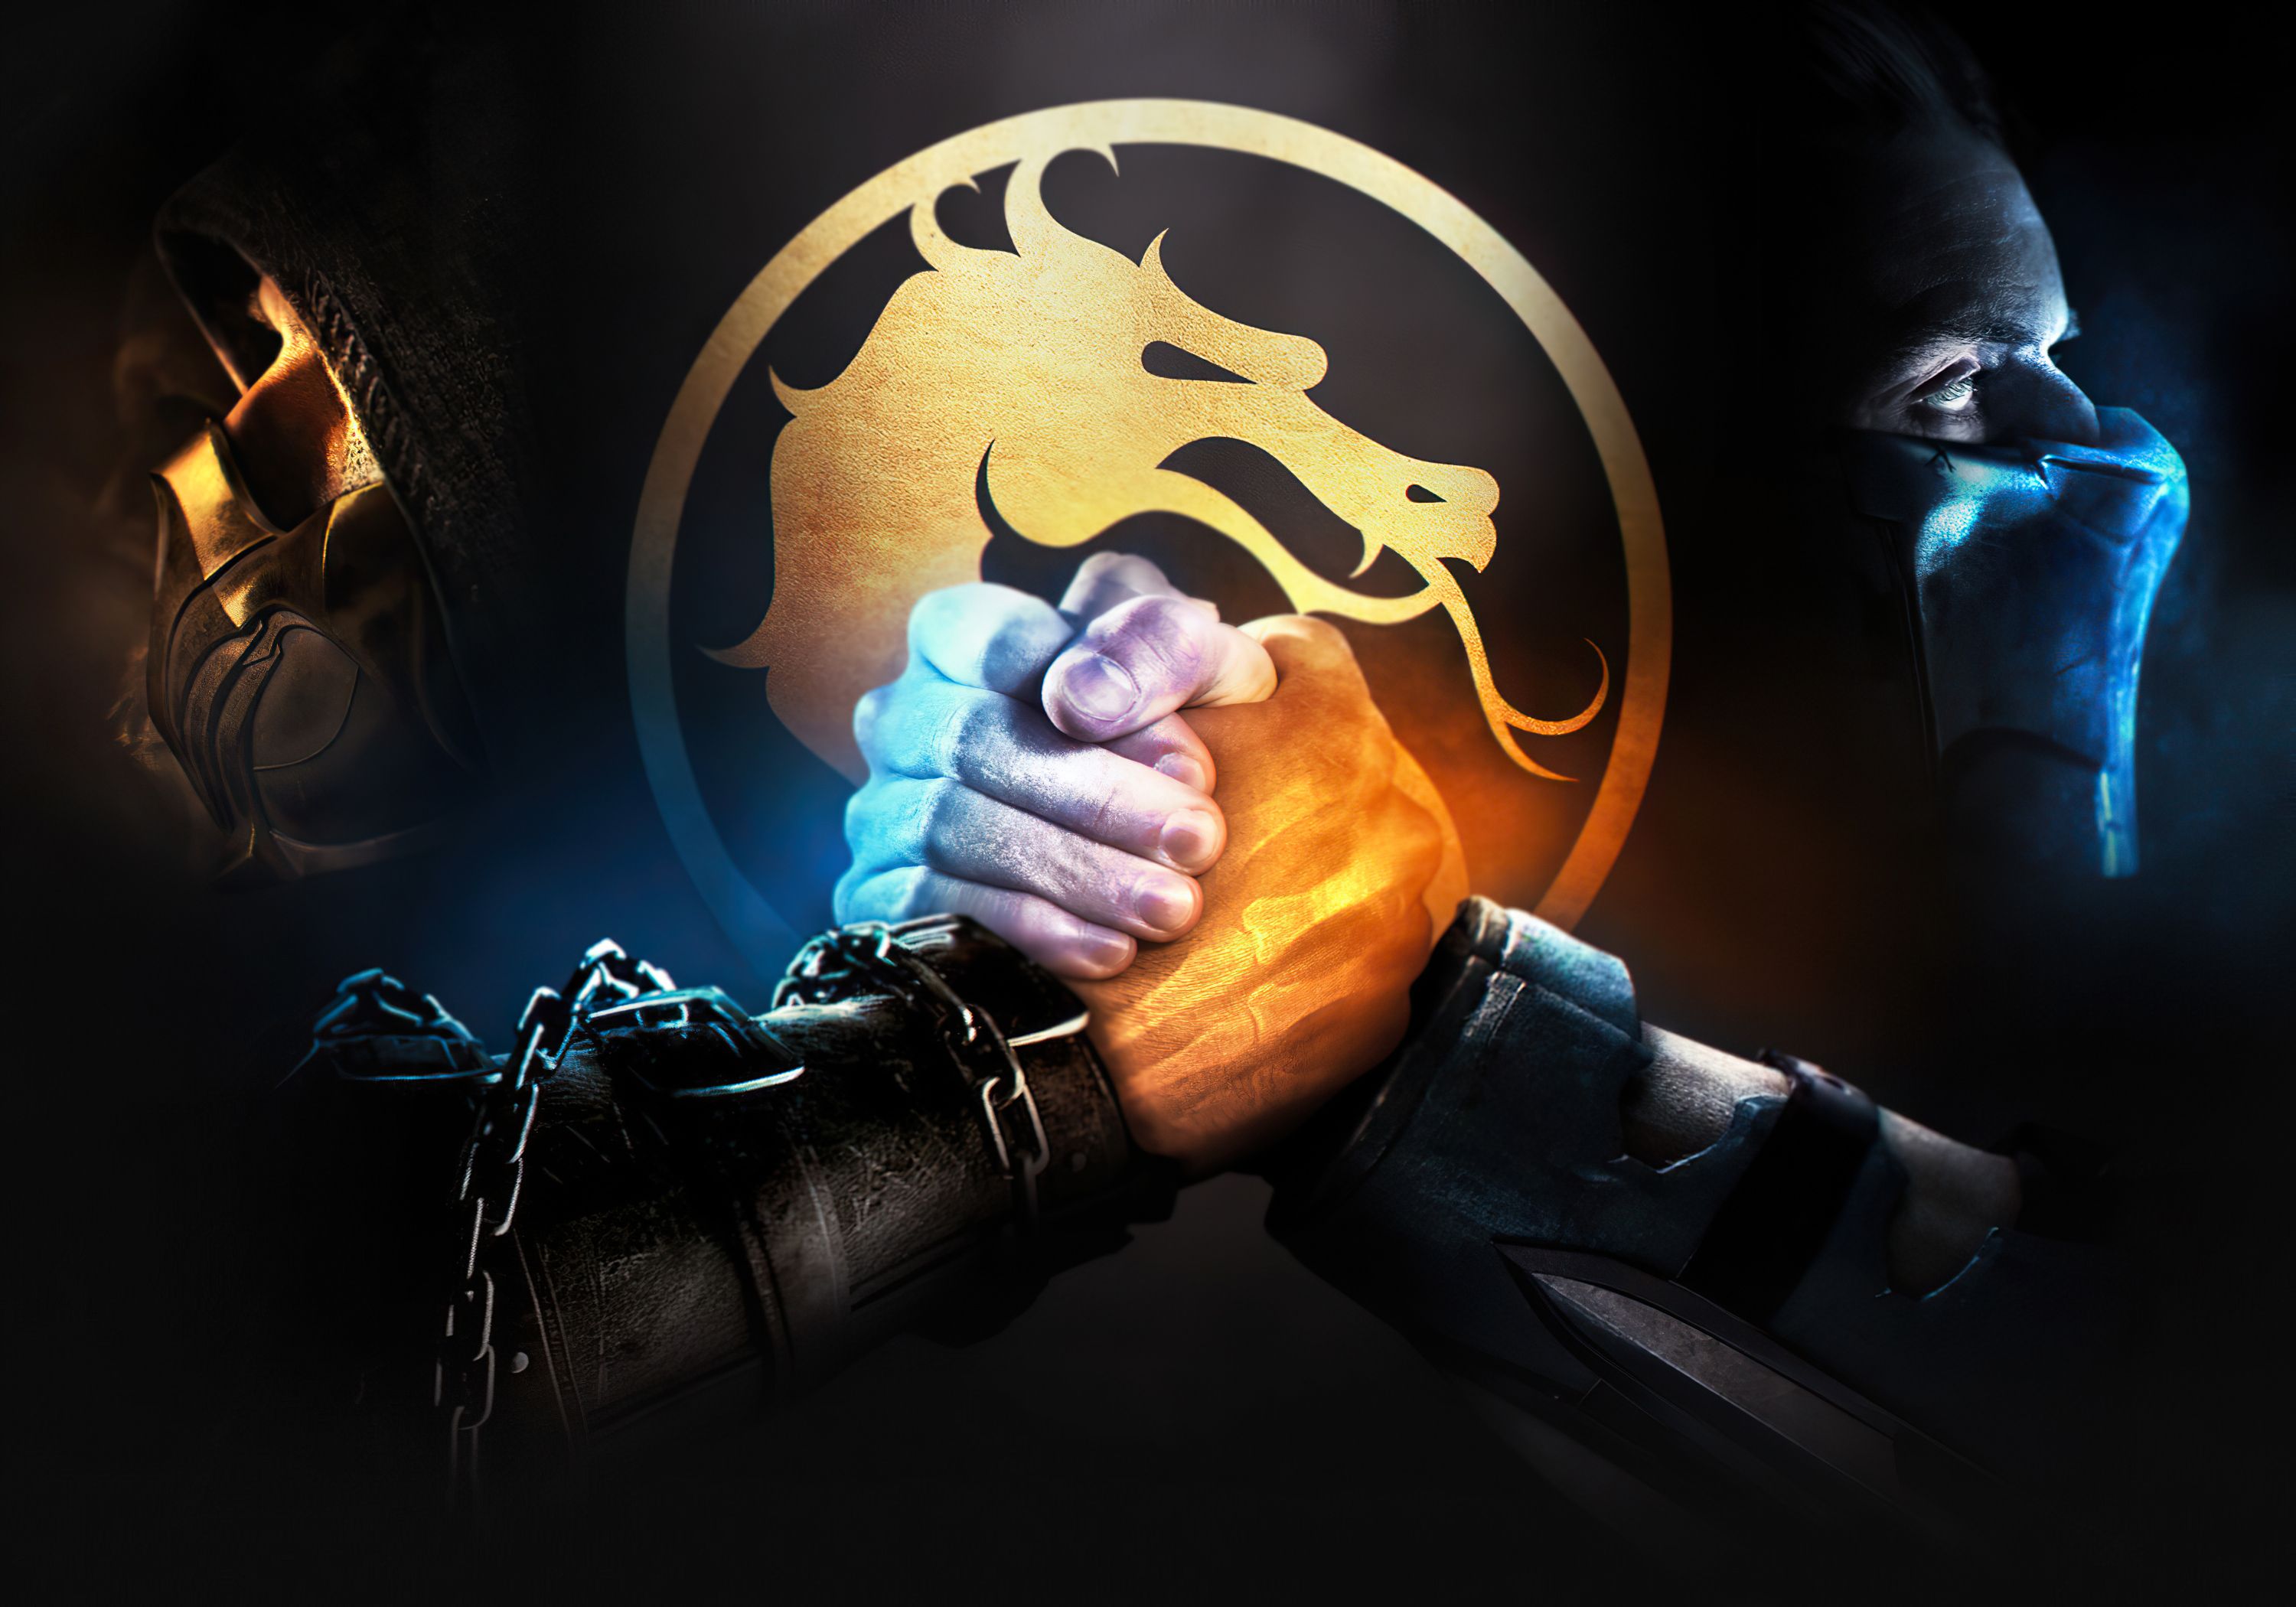 SCORPION AND SUB ZERO Mortal Kombat, HD Artist, 4k Wallpaper, Image, Background, Photo and Picture